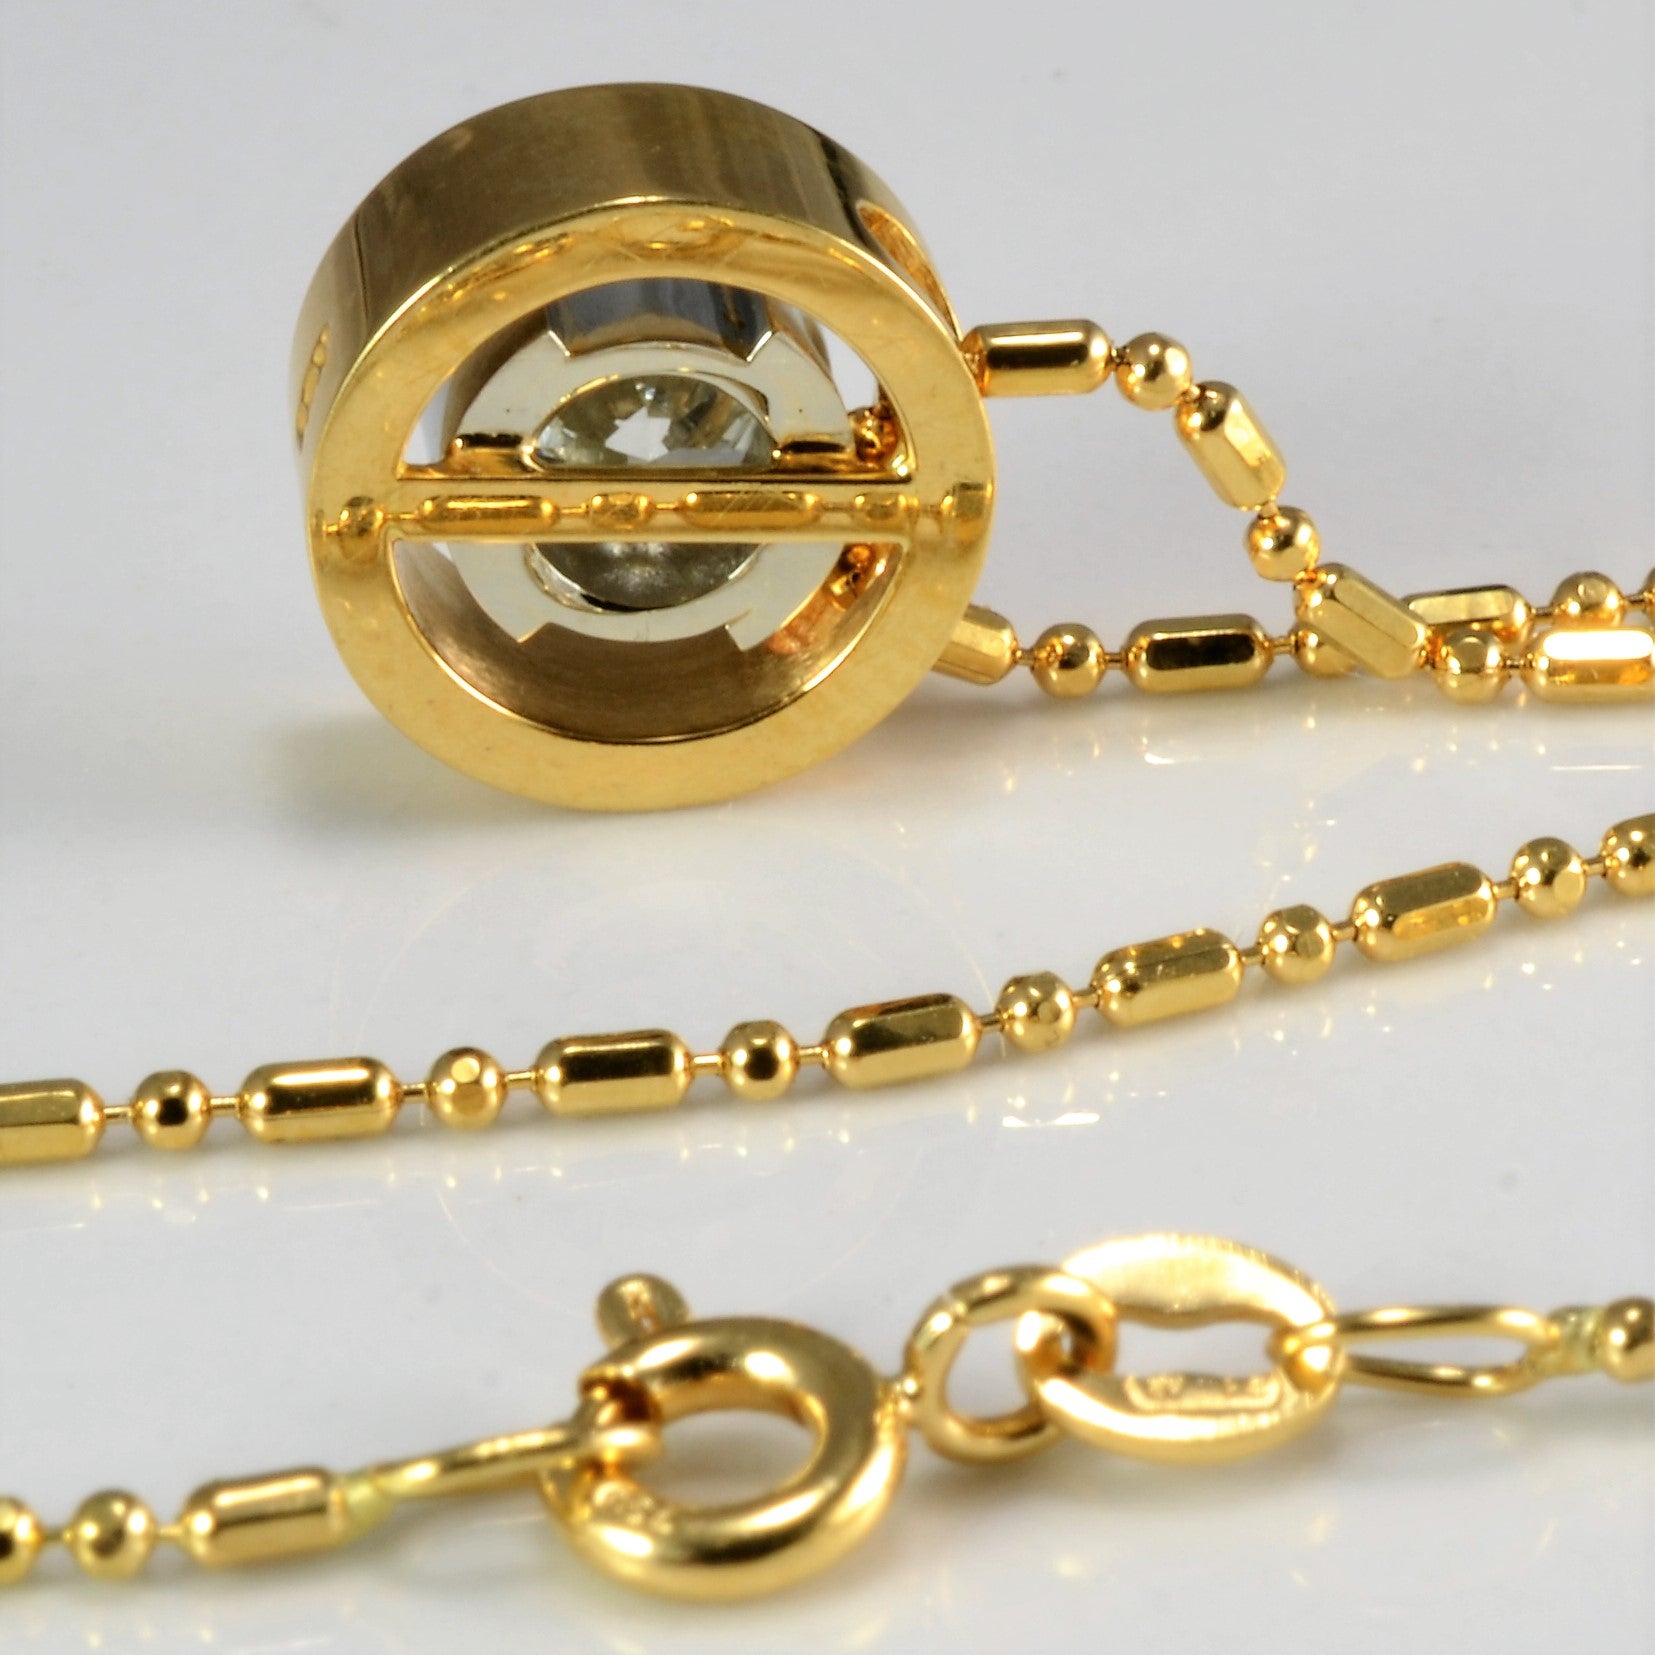 Bezel Set Solitaire Diamond Pendant Beaded Necklace | 0.58 ct, 18''|